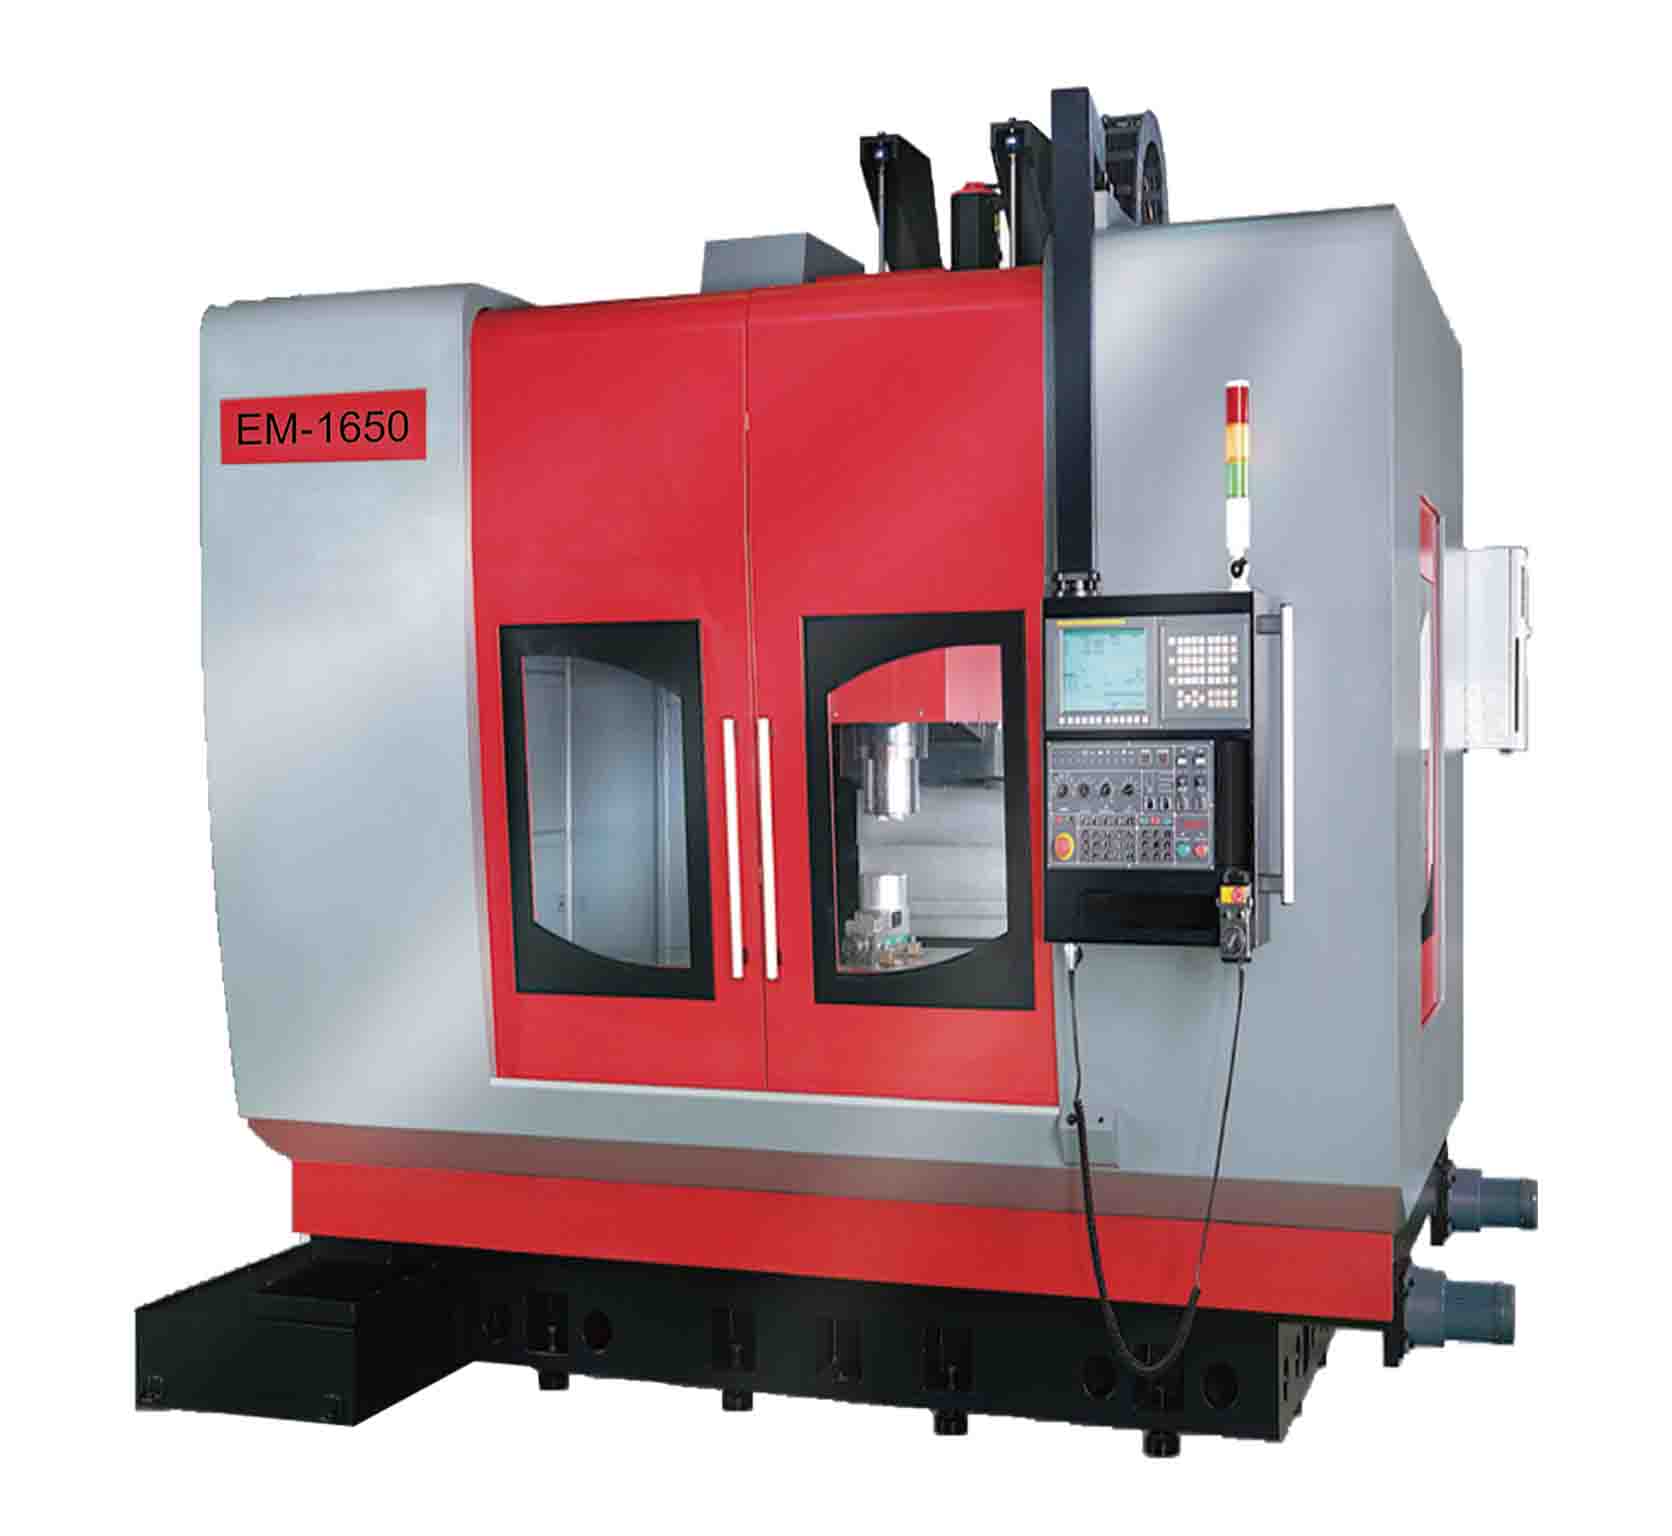 EM-1650 CNC vertical machining centers